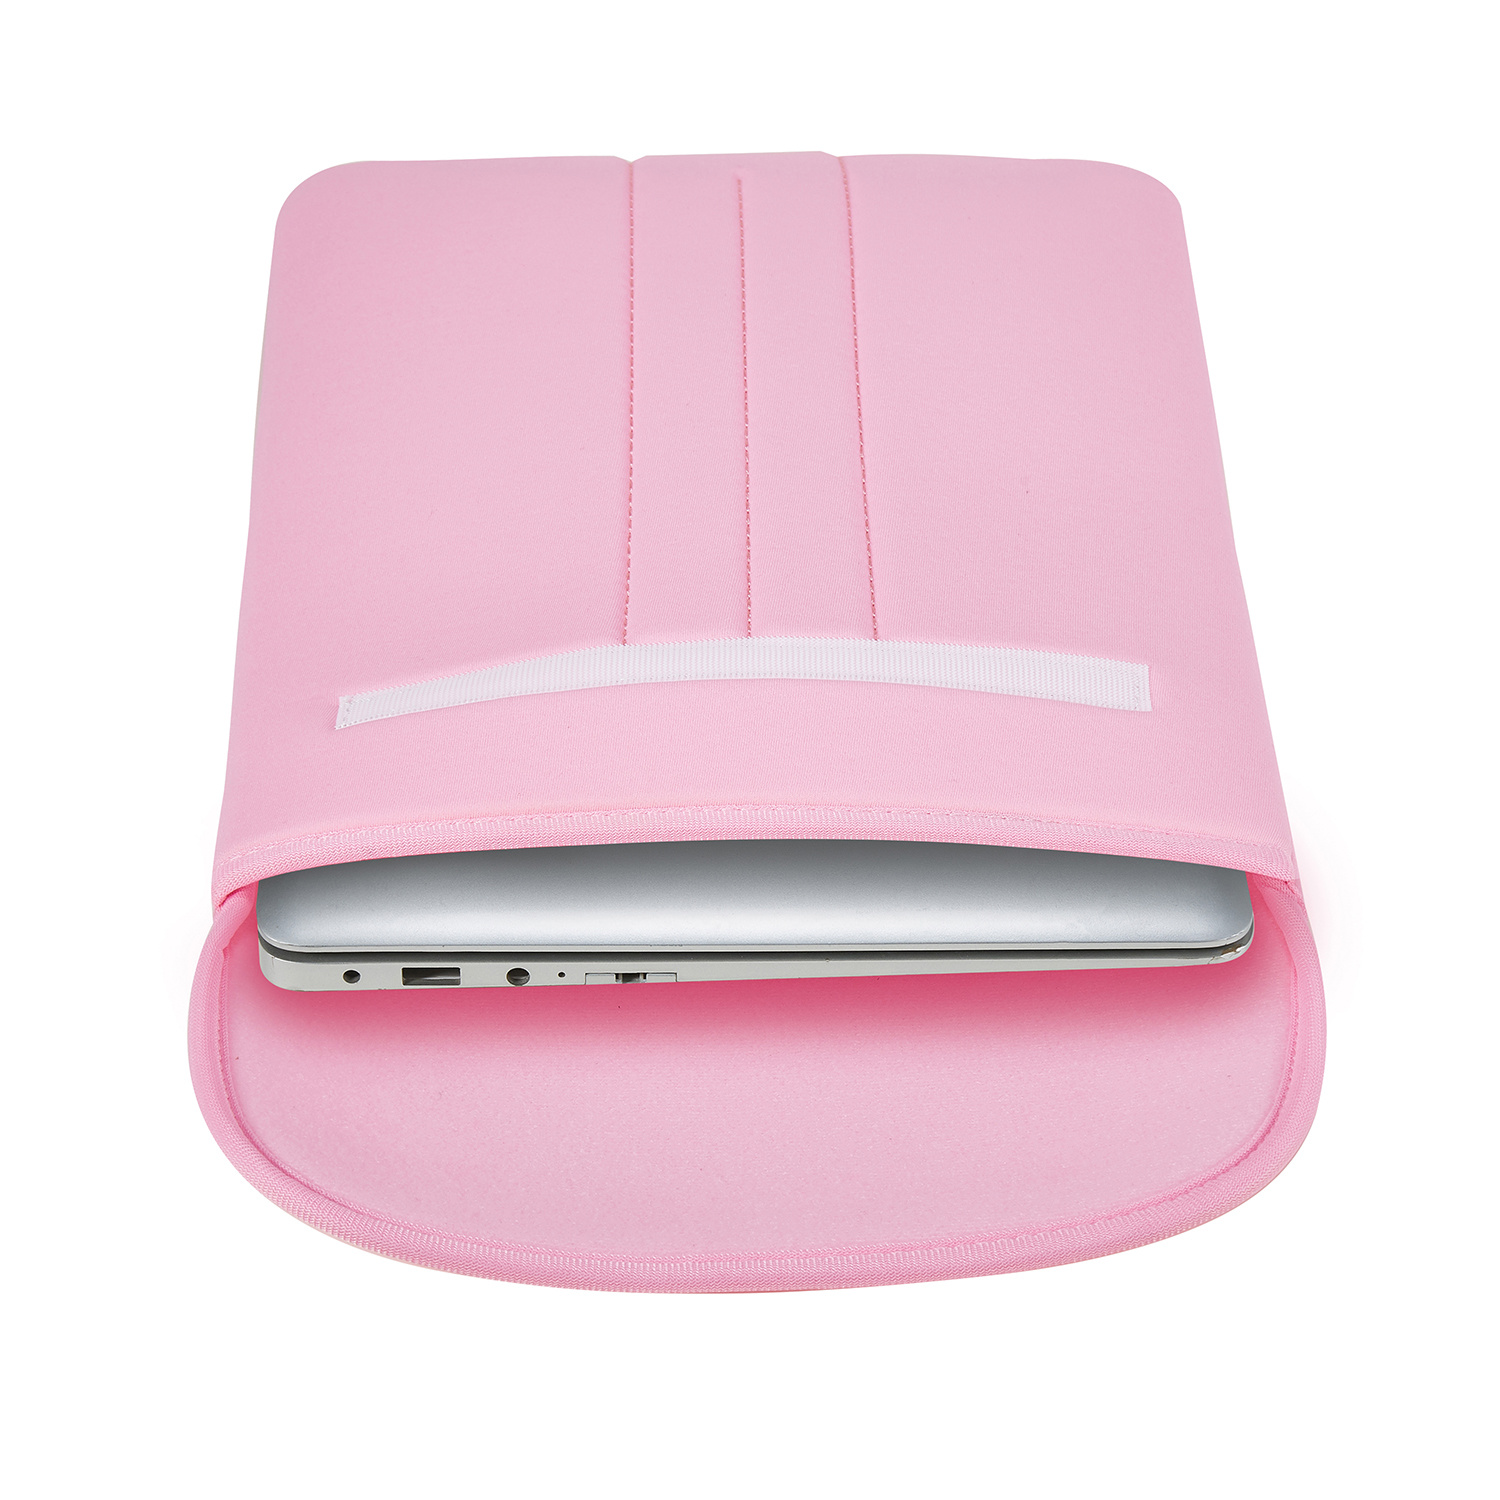 Case2go Laptop Sleeve - Laptophoes voor Macbook, Laptop en Chromebook - inch / 17.3 inch - Roze |